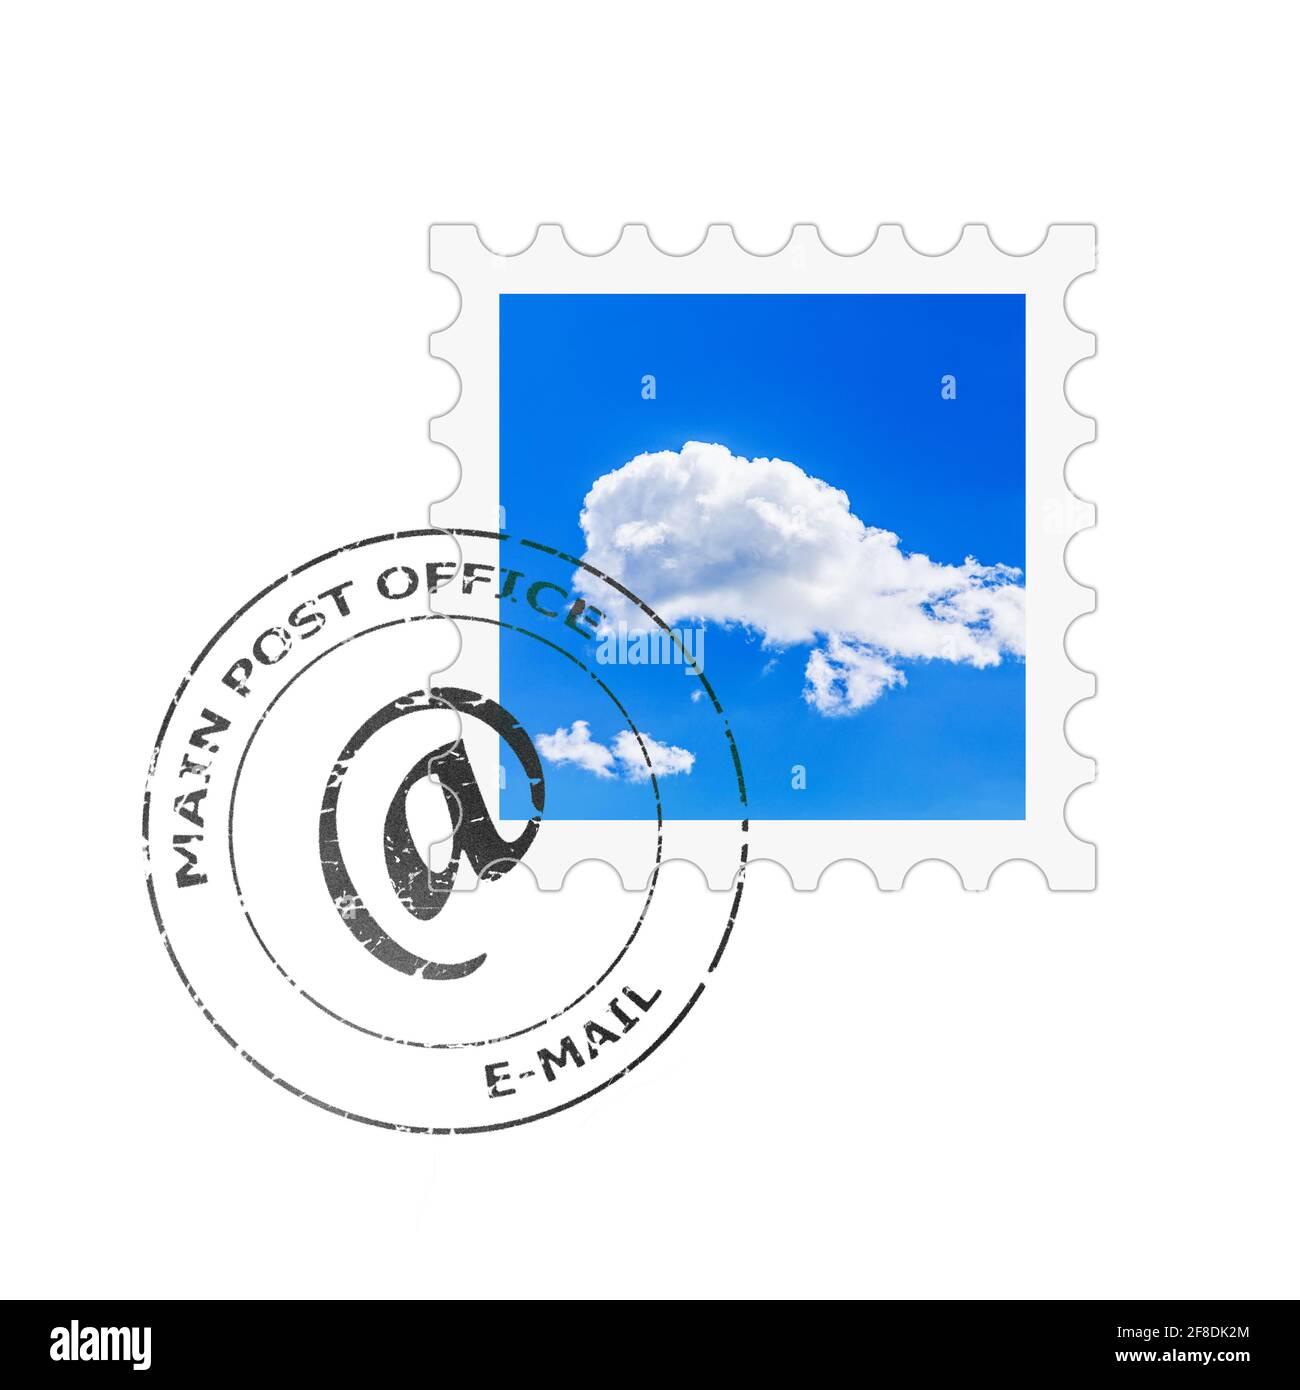 Postage stamp and postmark for e-mail letter envelope Stock Photo